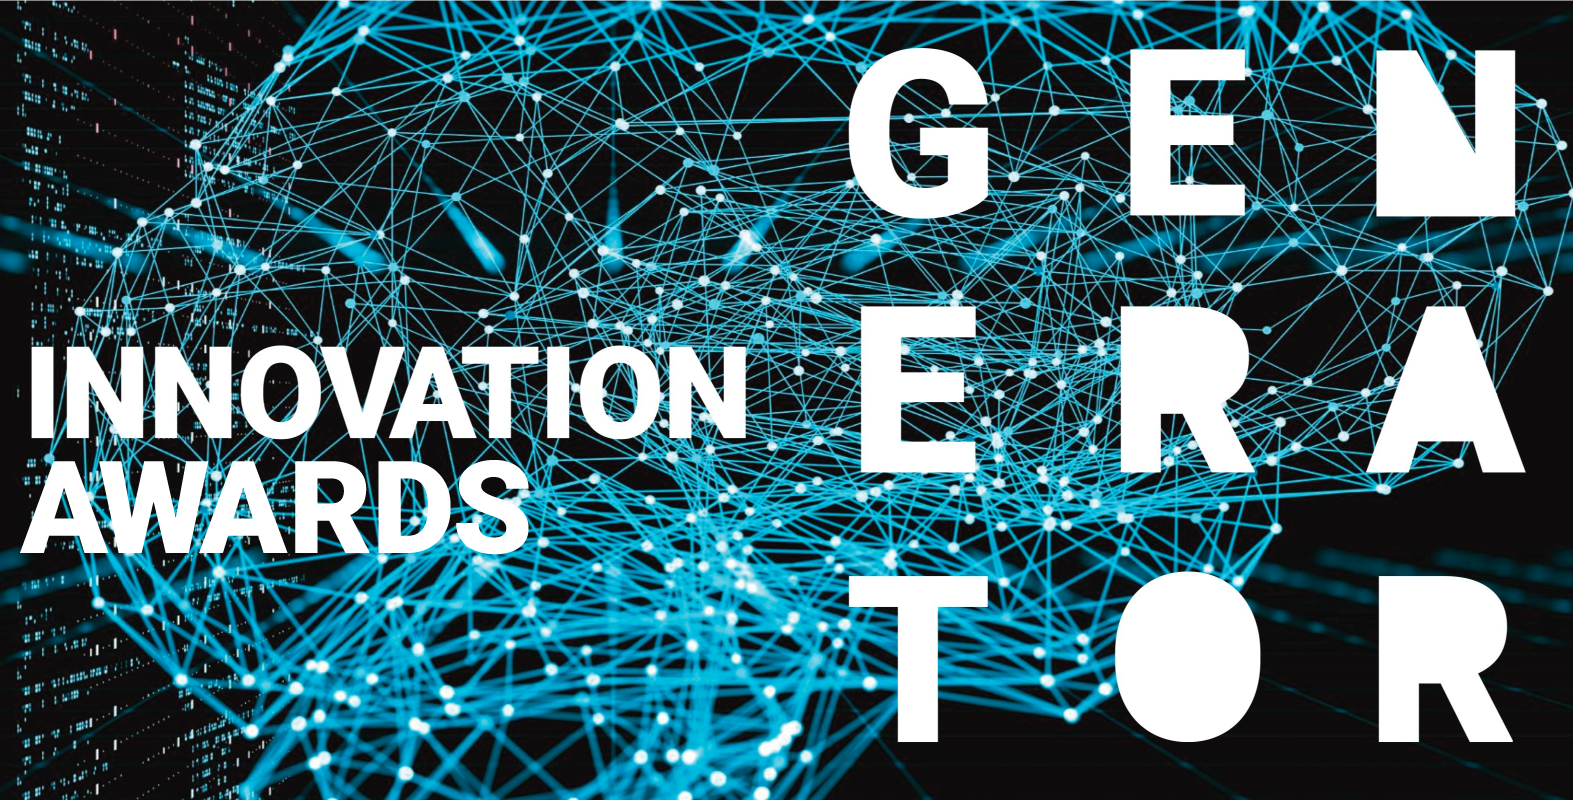 Innovation Awards Banner